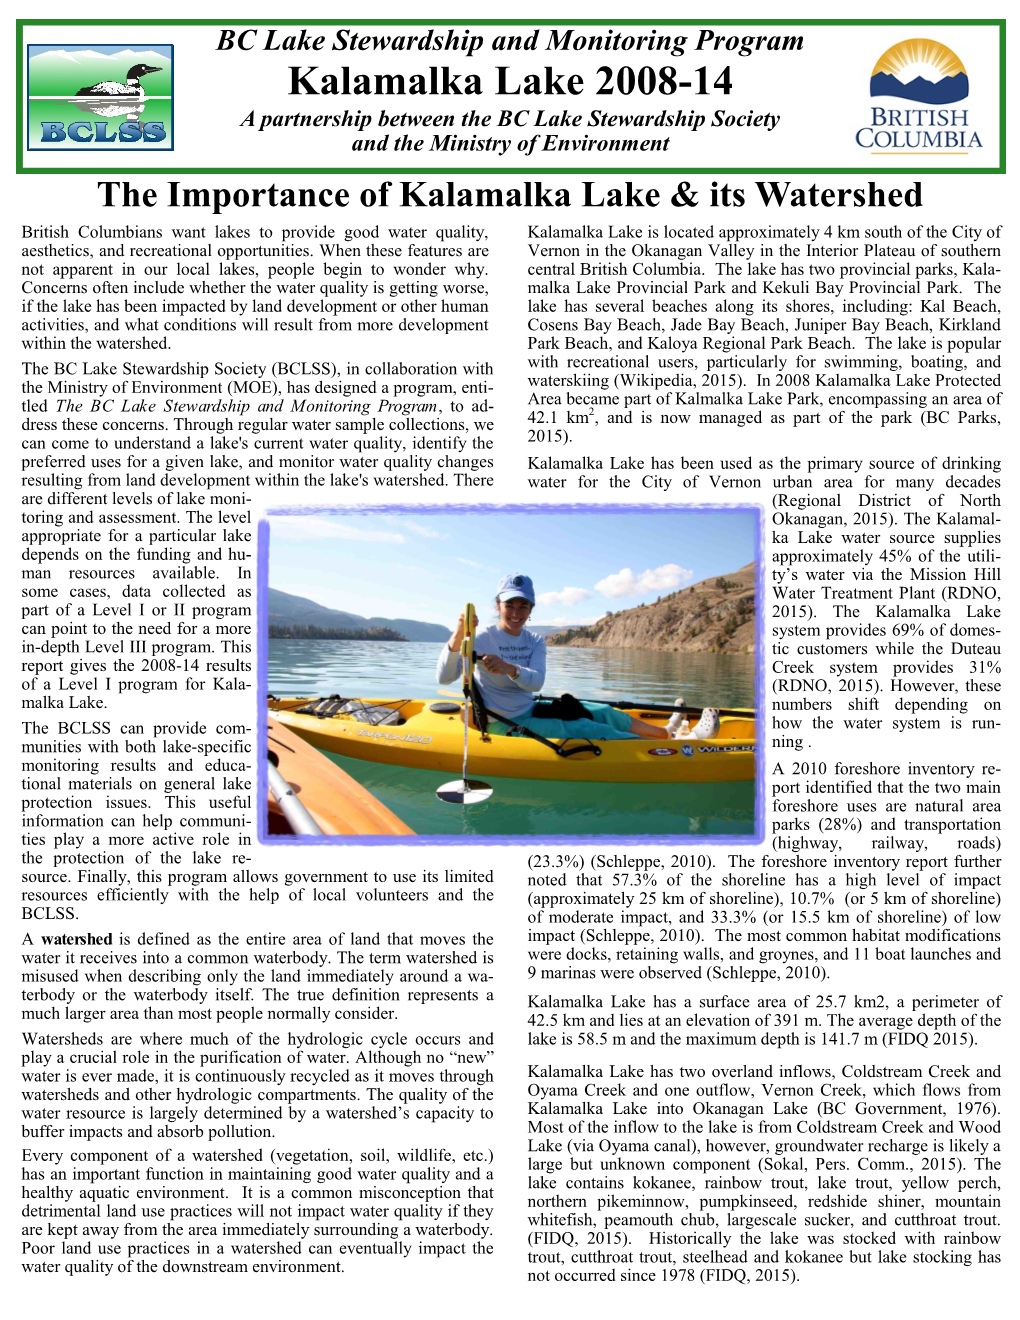 Kalamalka Lake 2008-14